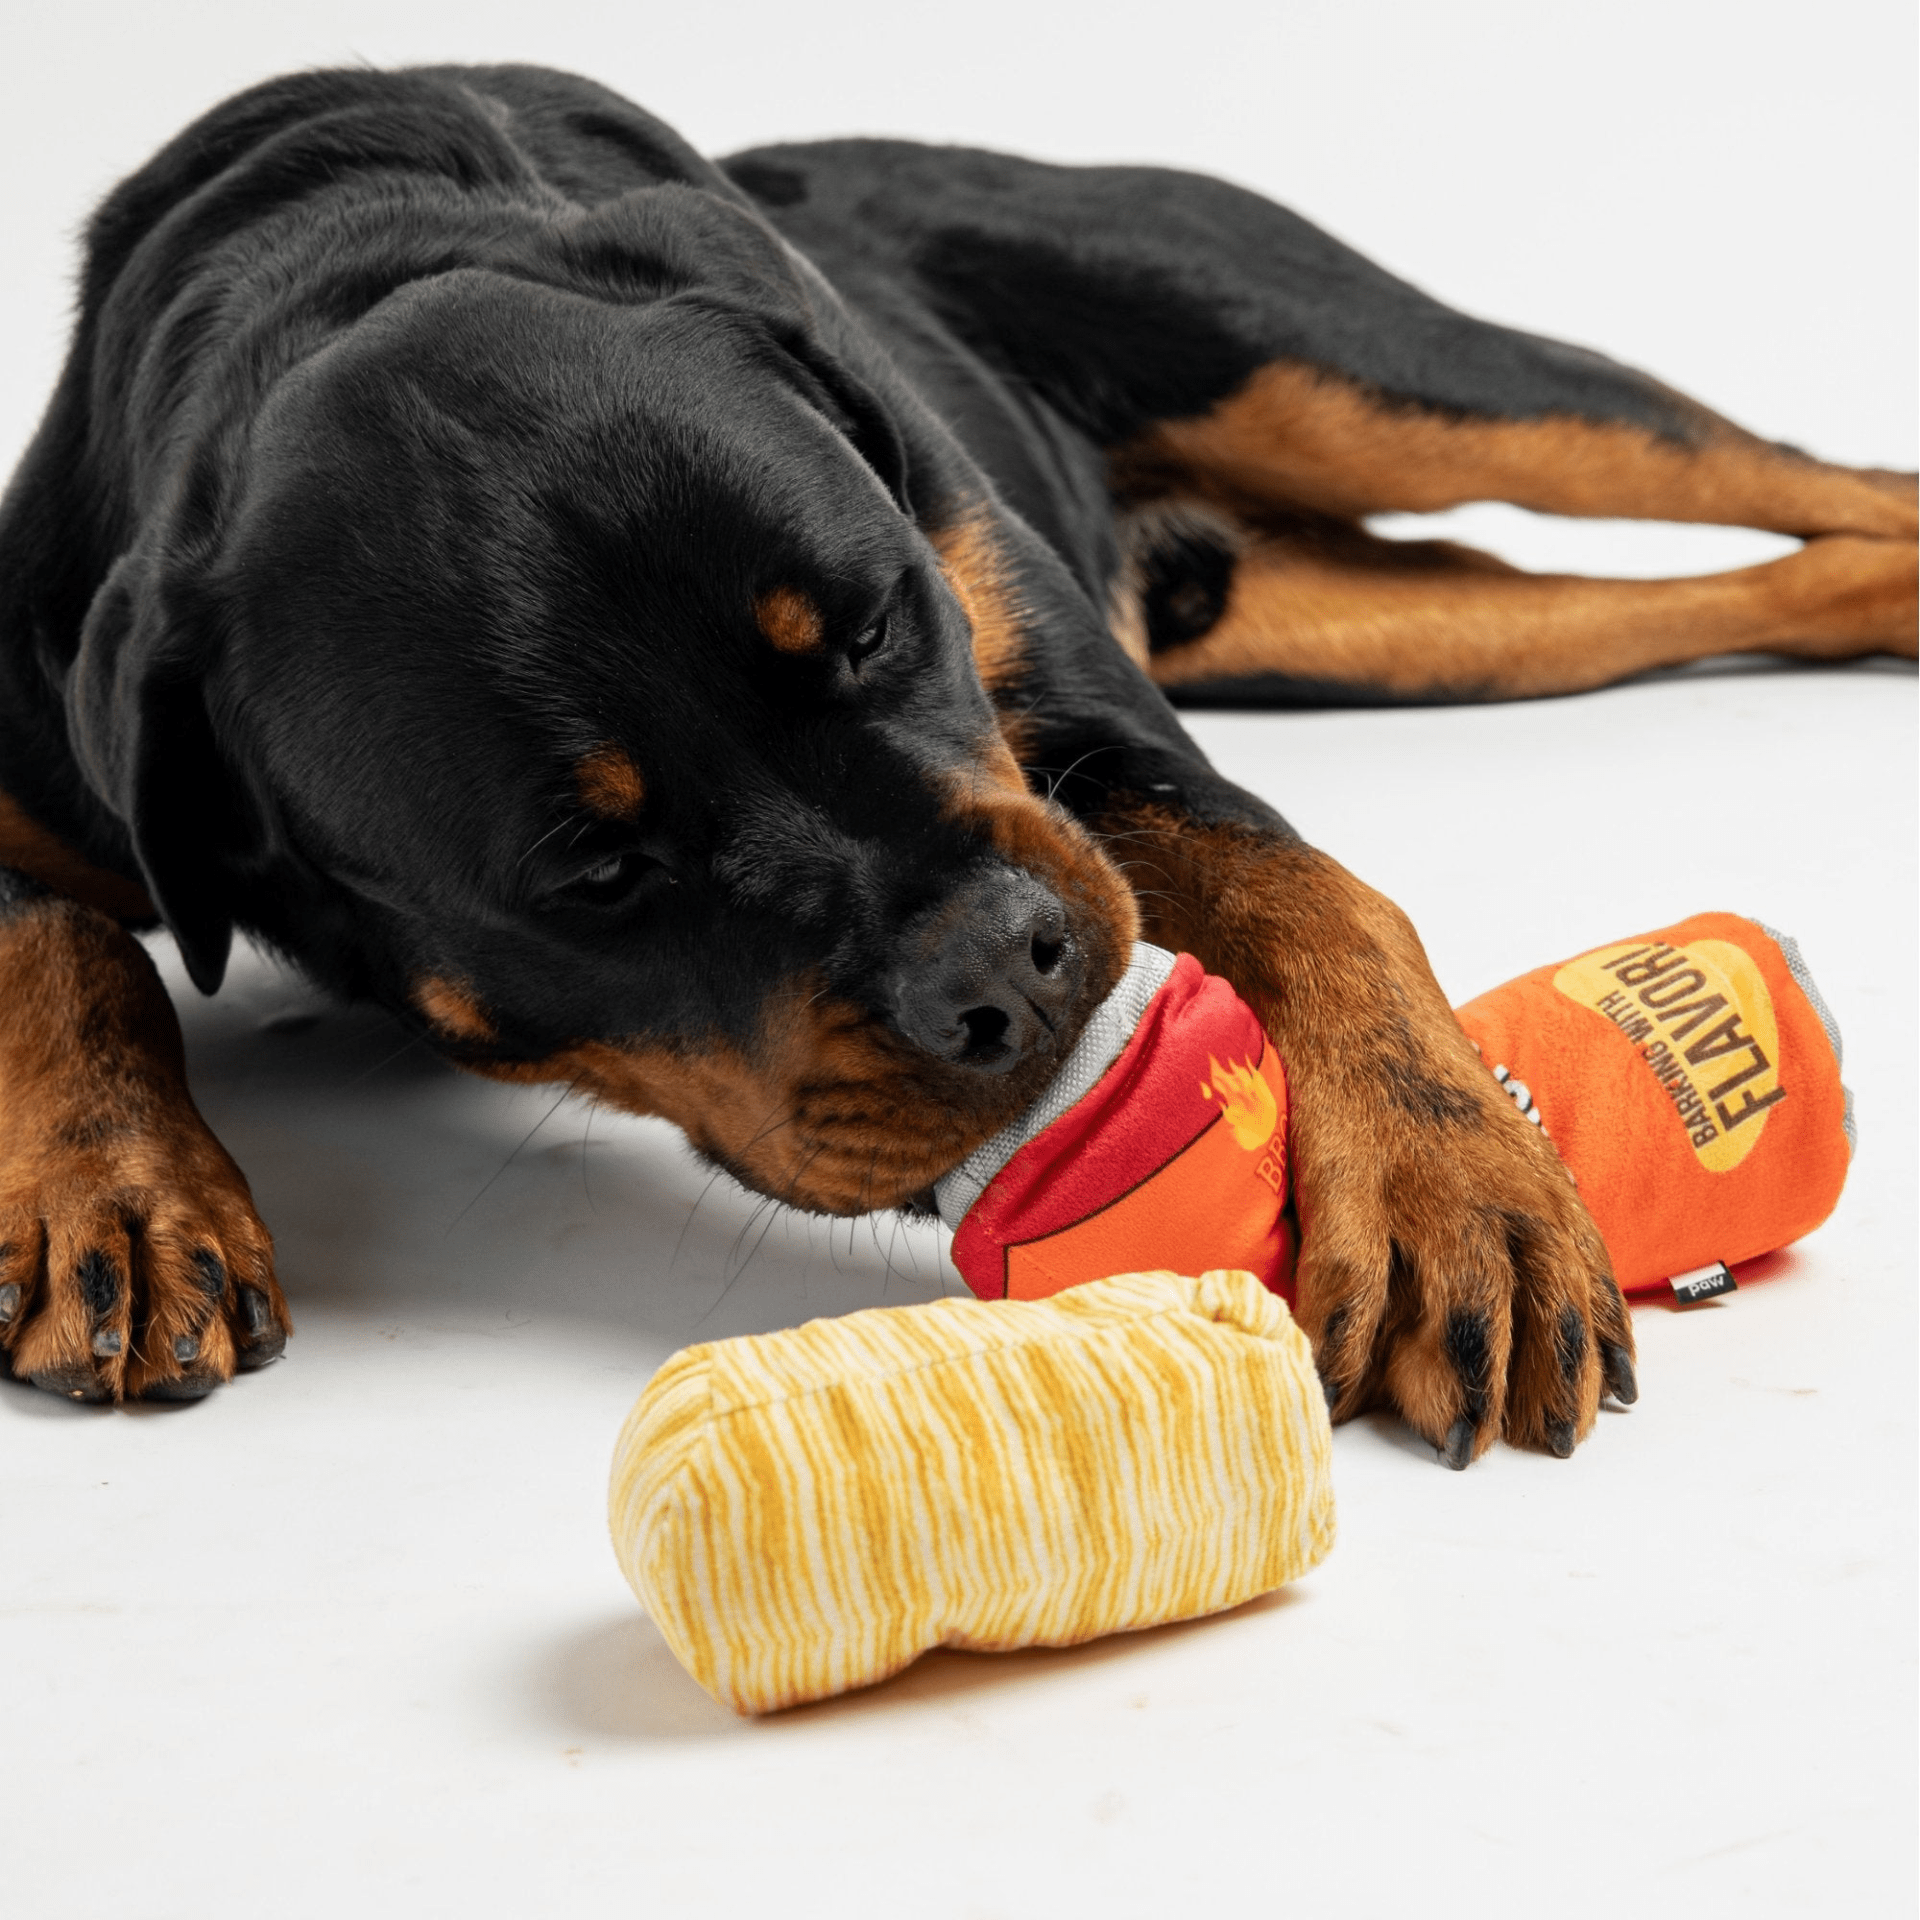 Dog and Pet Stuff Stack O' Potato Chips - Dog Toy